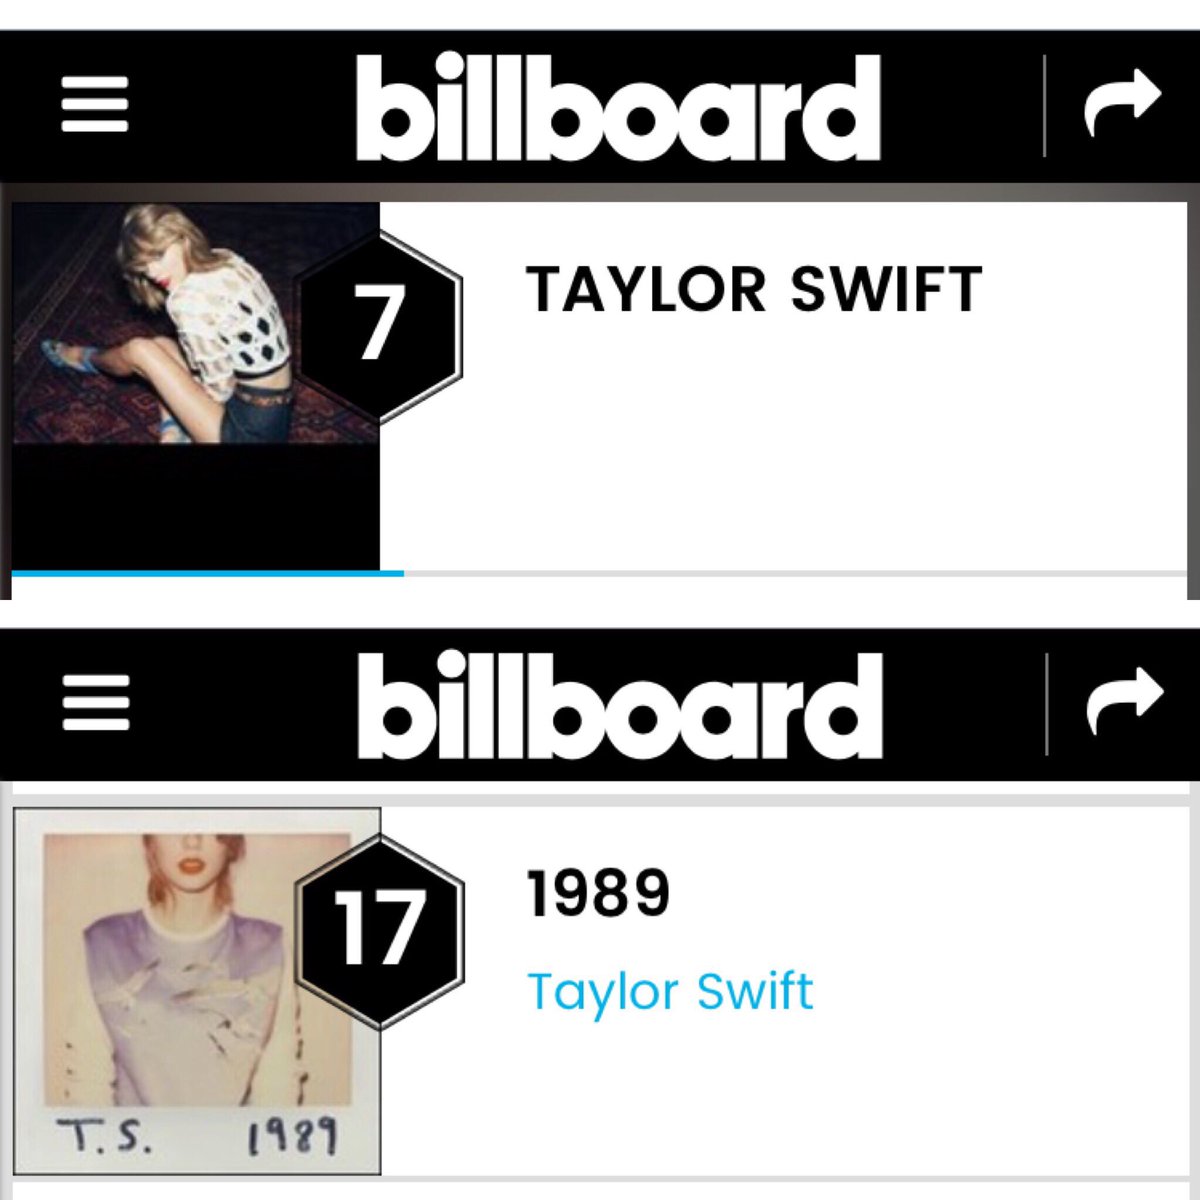 Billboard Year End Charts 2014